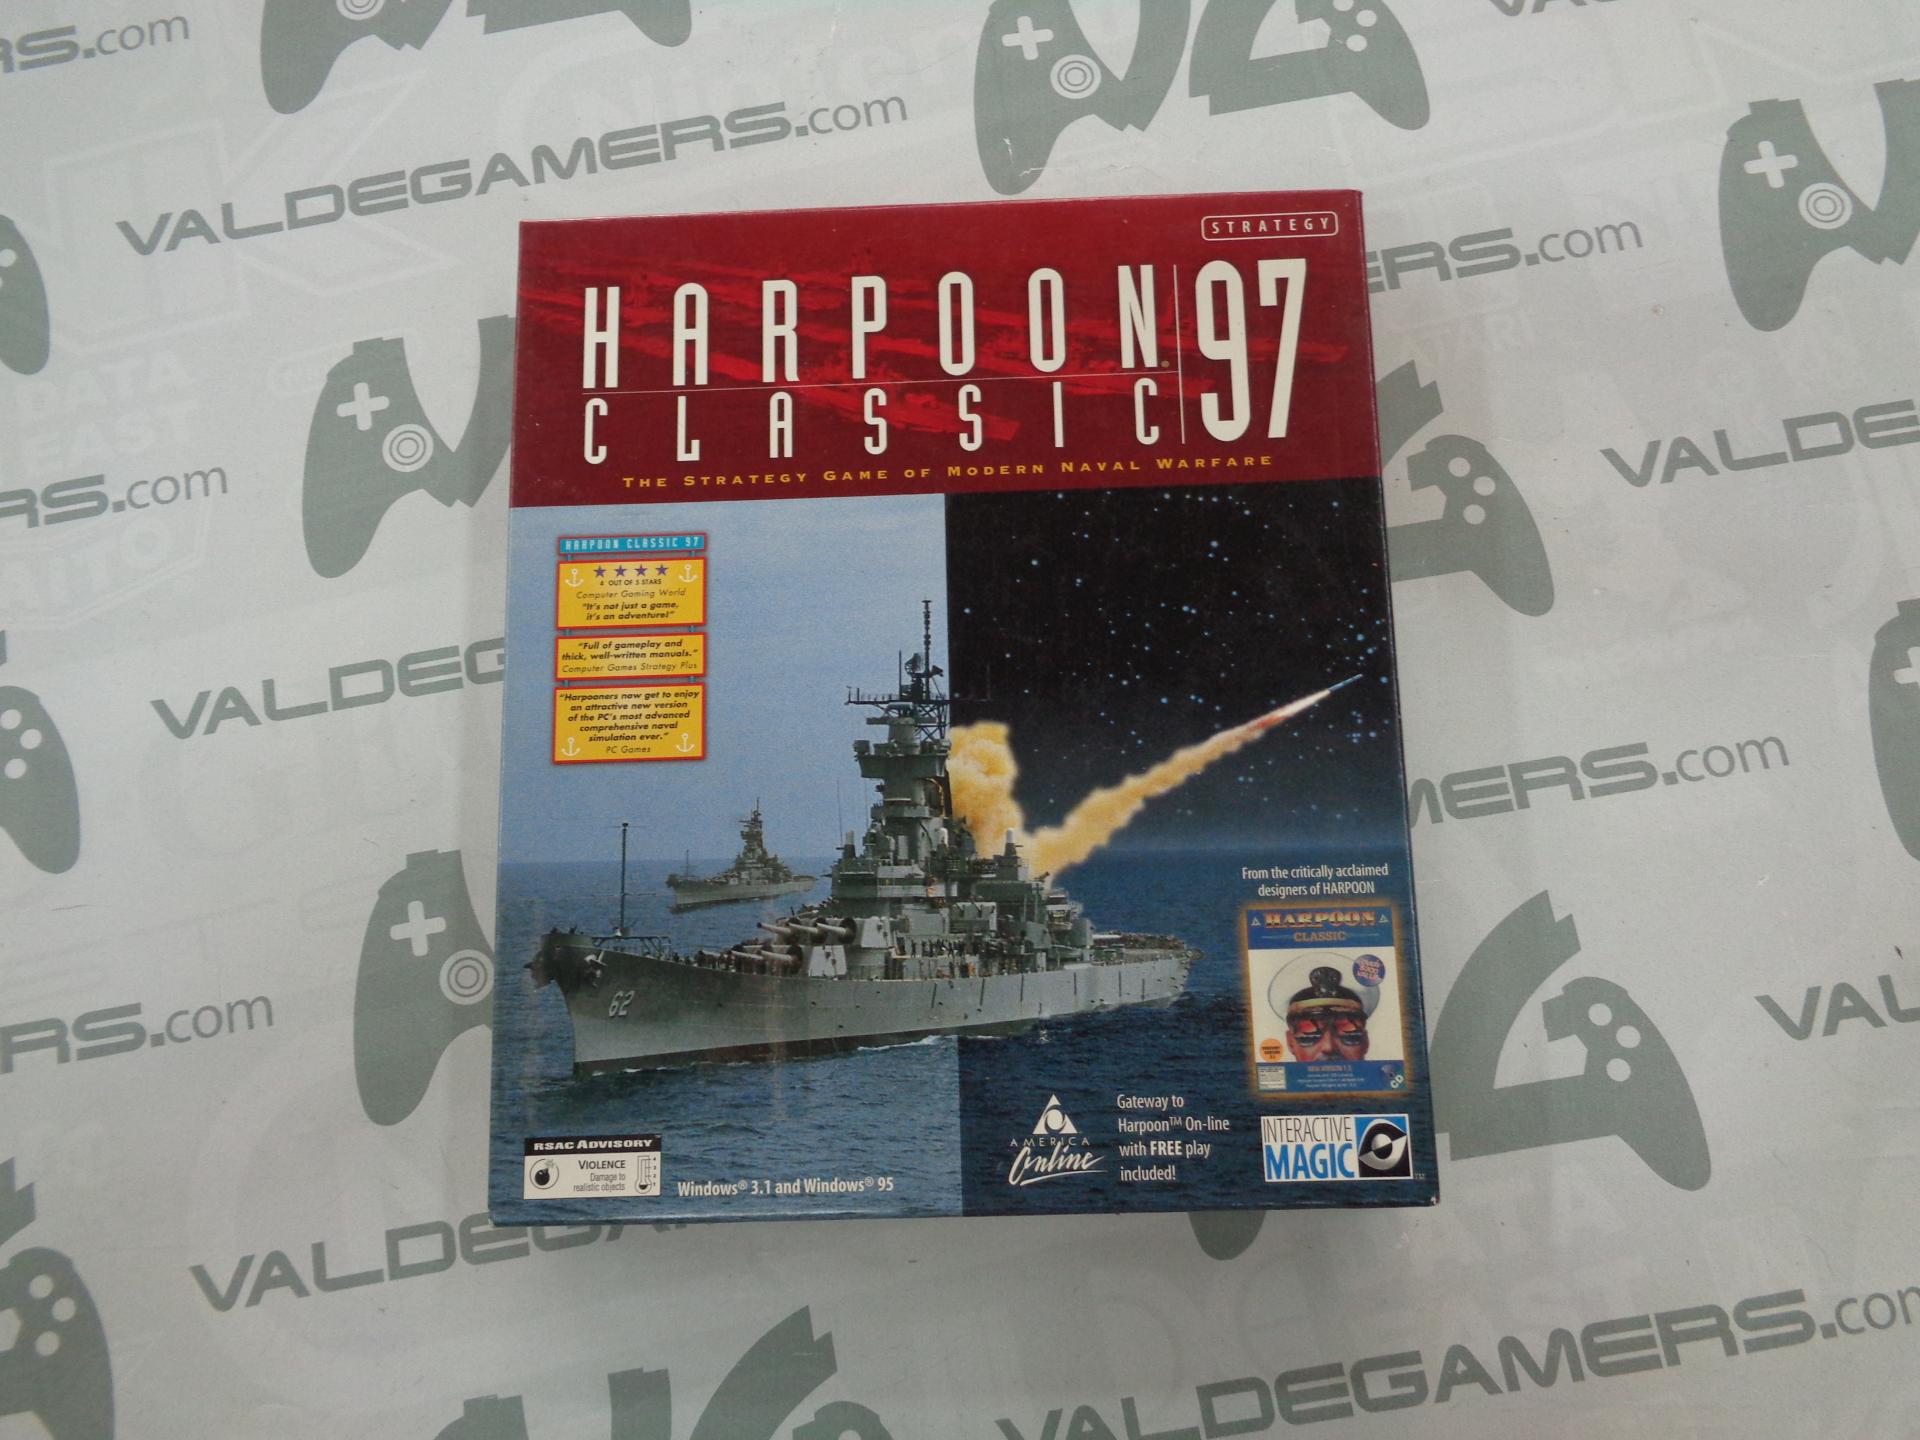  Harpoon Classic 97